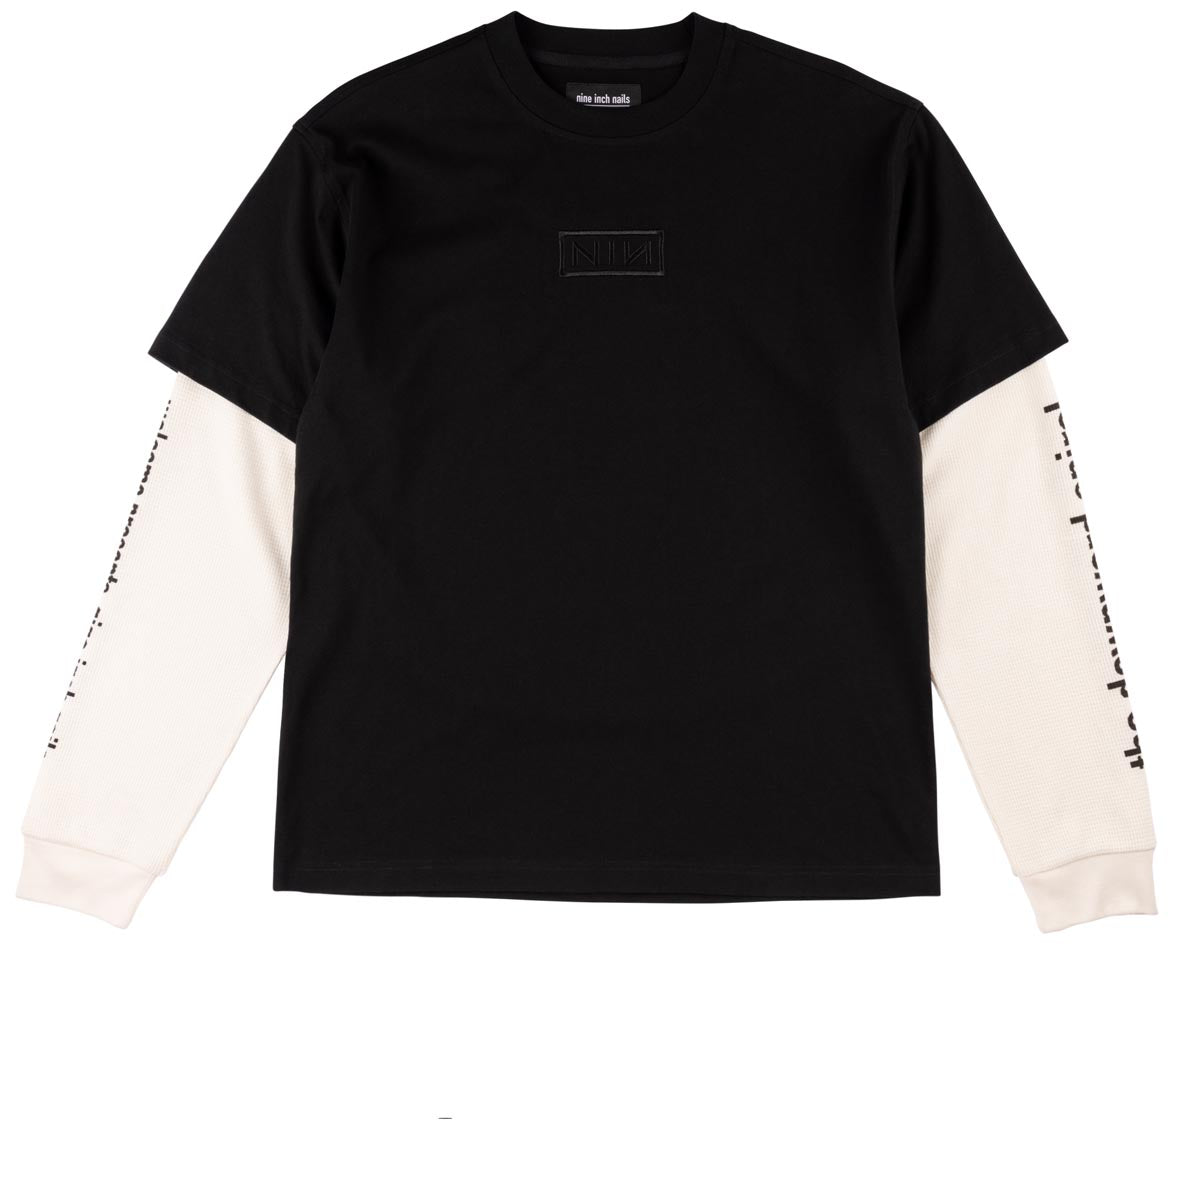 Welcome x Nine Inch Nails Heresy Layered Knit Shirt - Black/Bone image 1